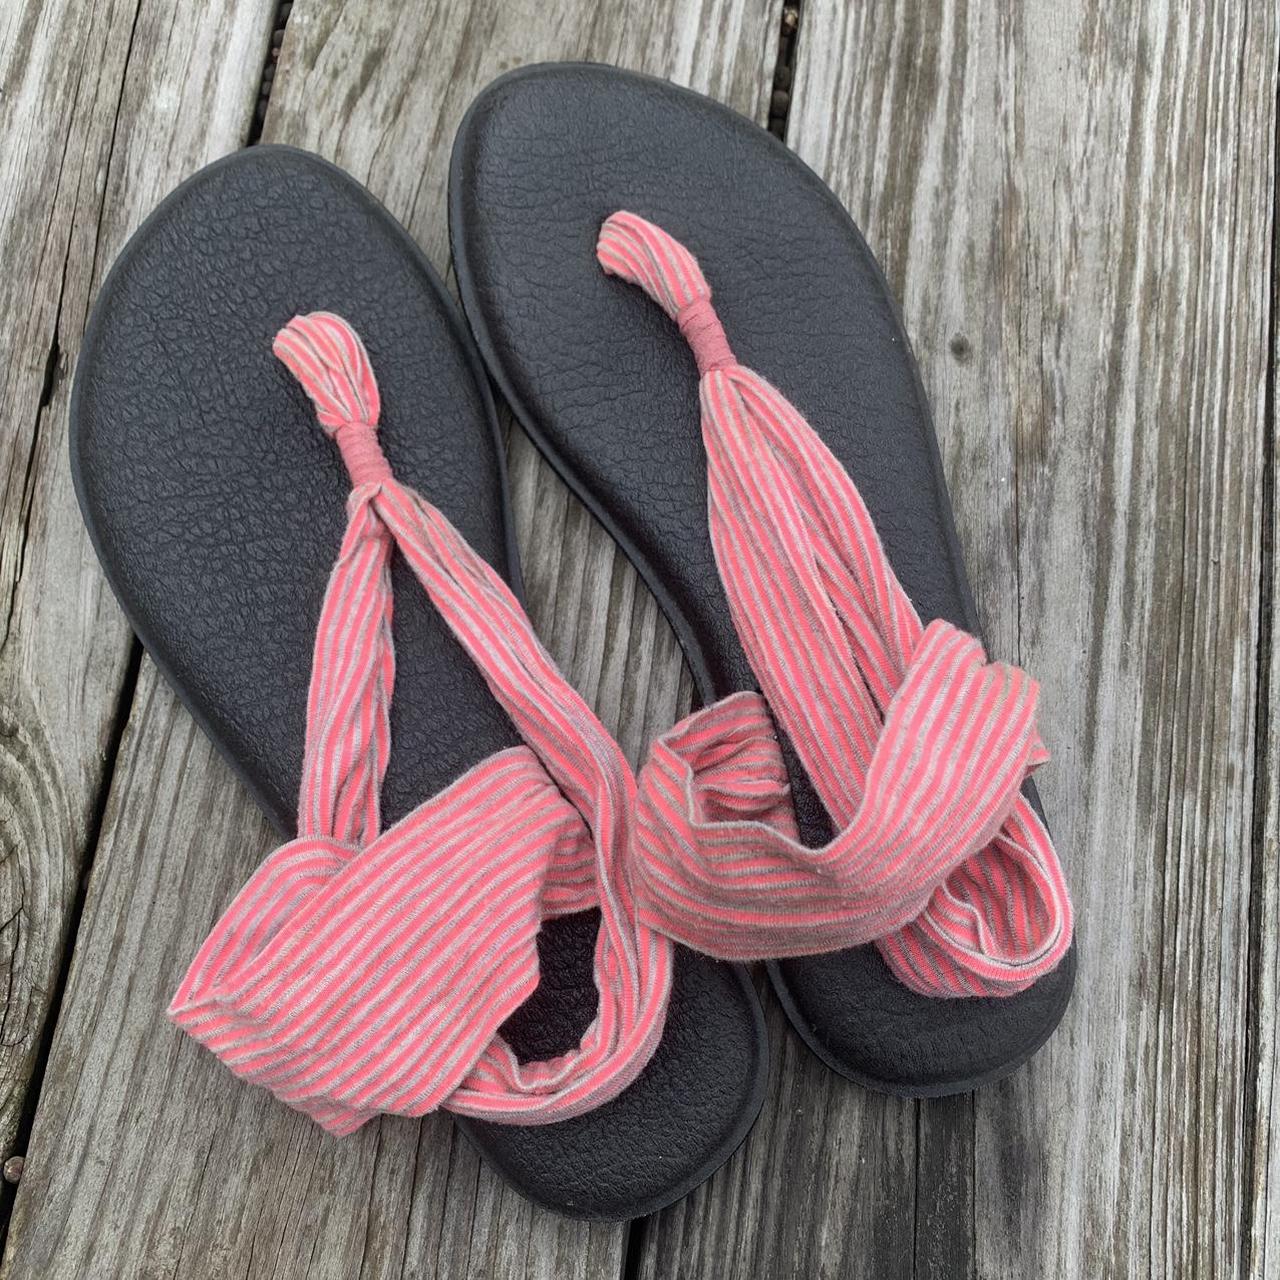 Sanuk pink and gray striped yoga sling sandals, size - Depop